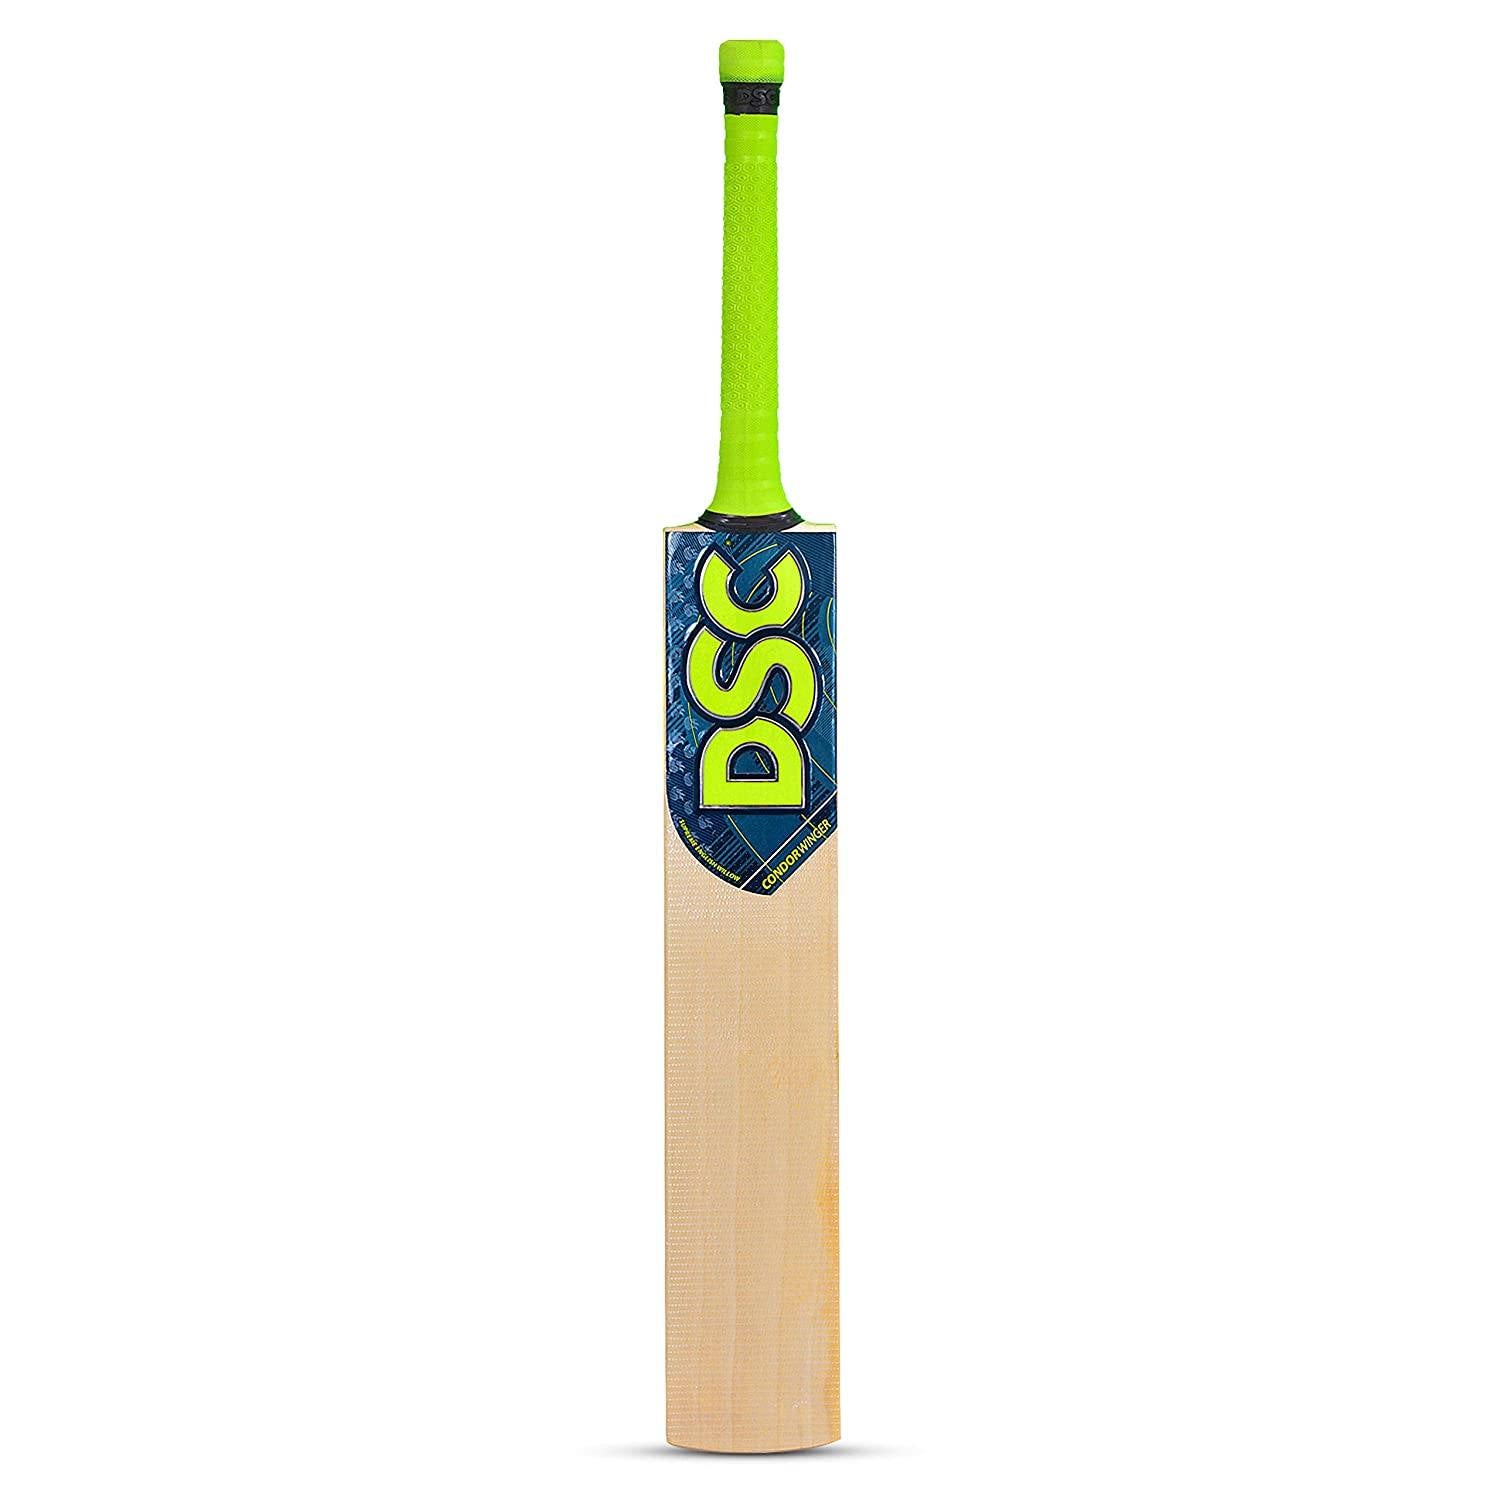 DSC Condor Winger English Willow Cricket Bat - Best Price online Prokicksports.com